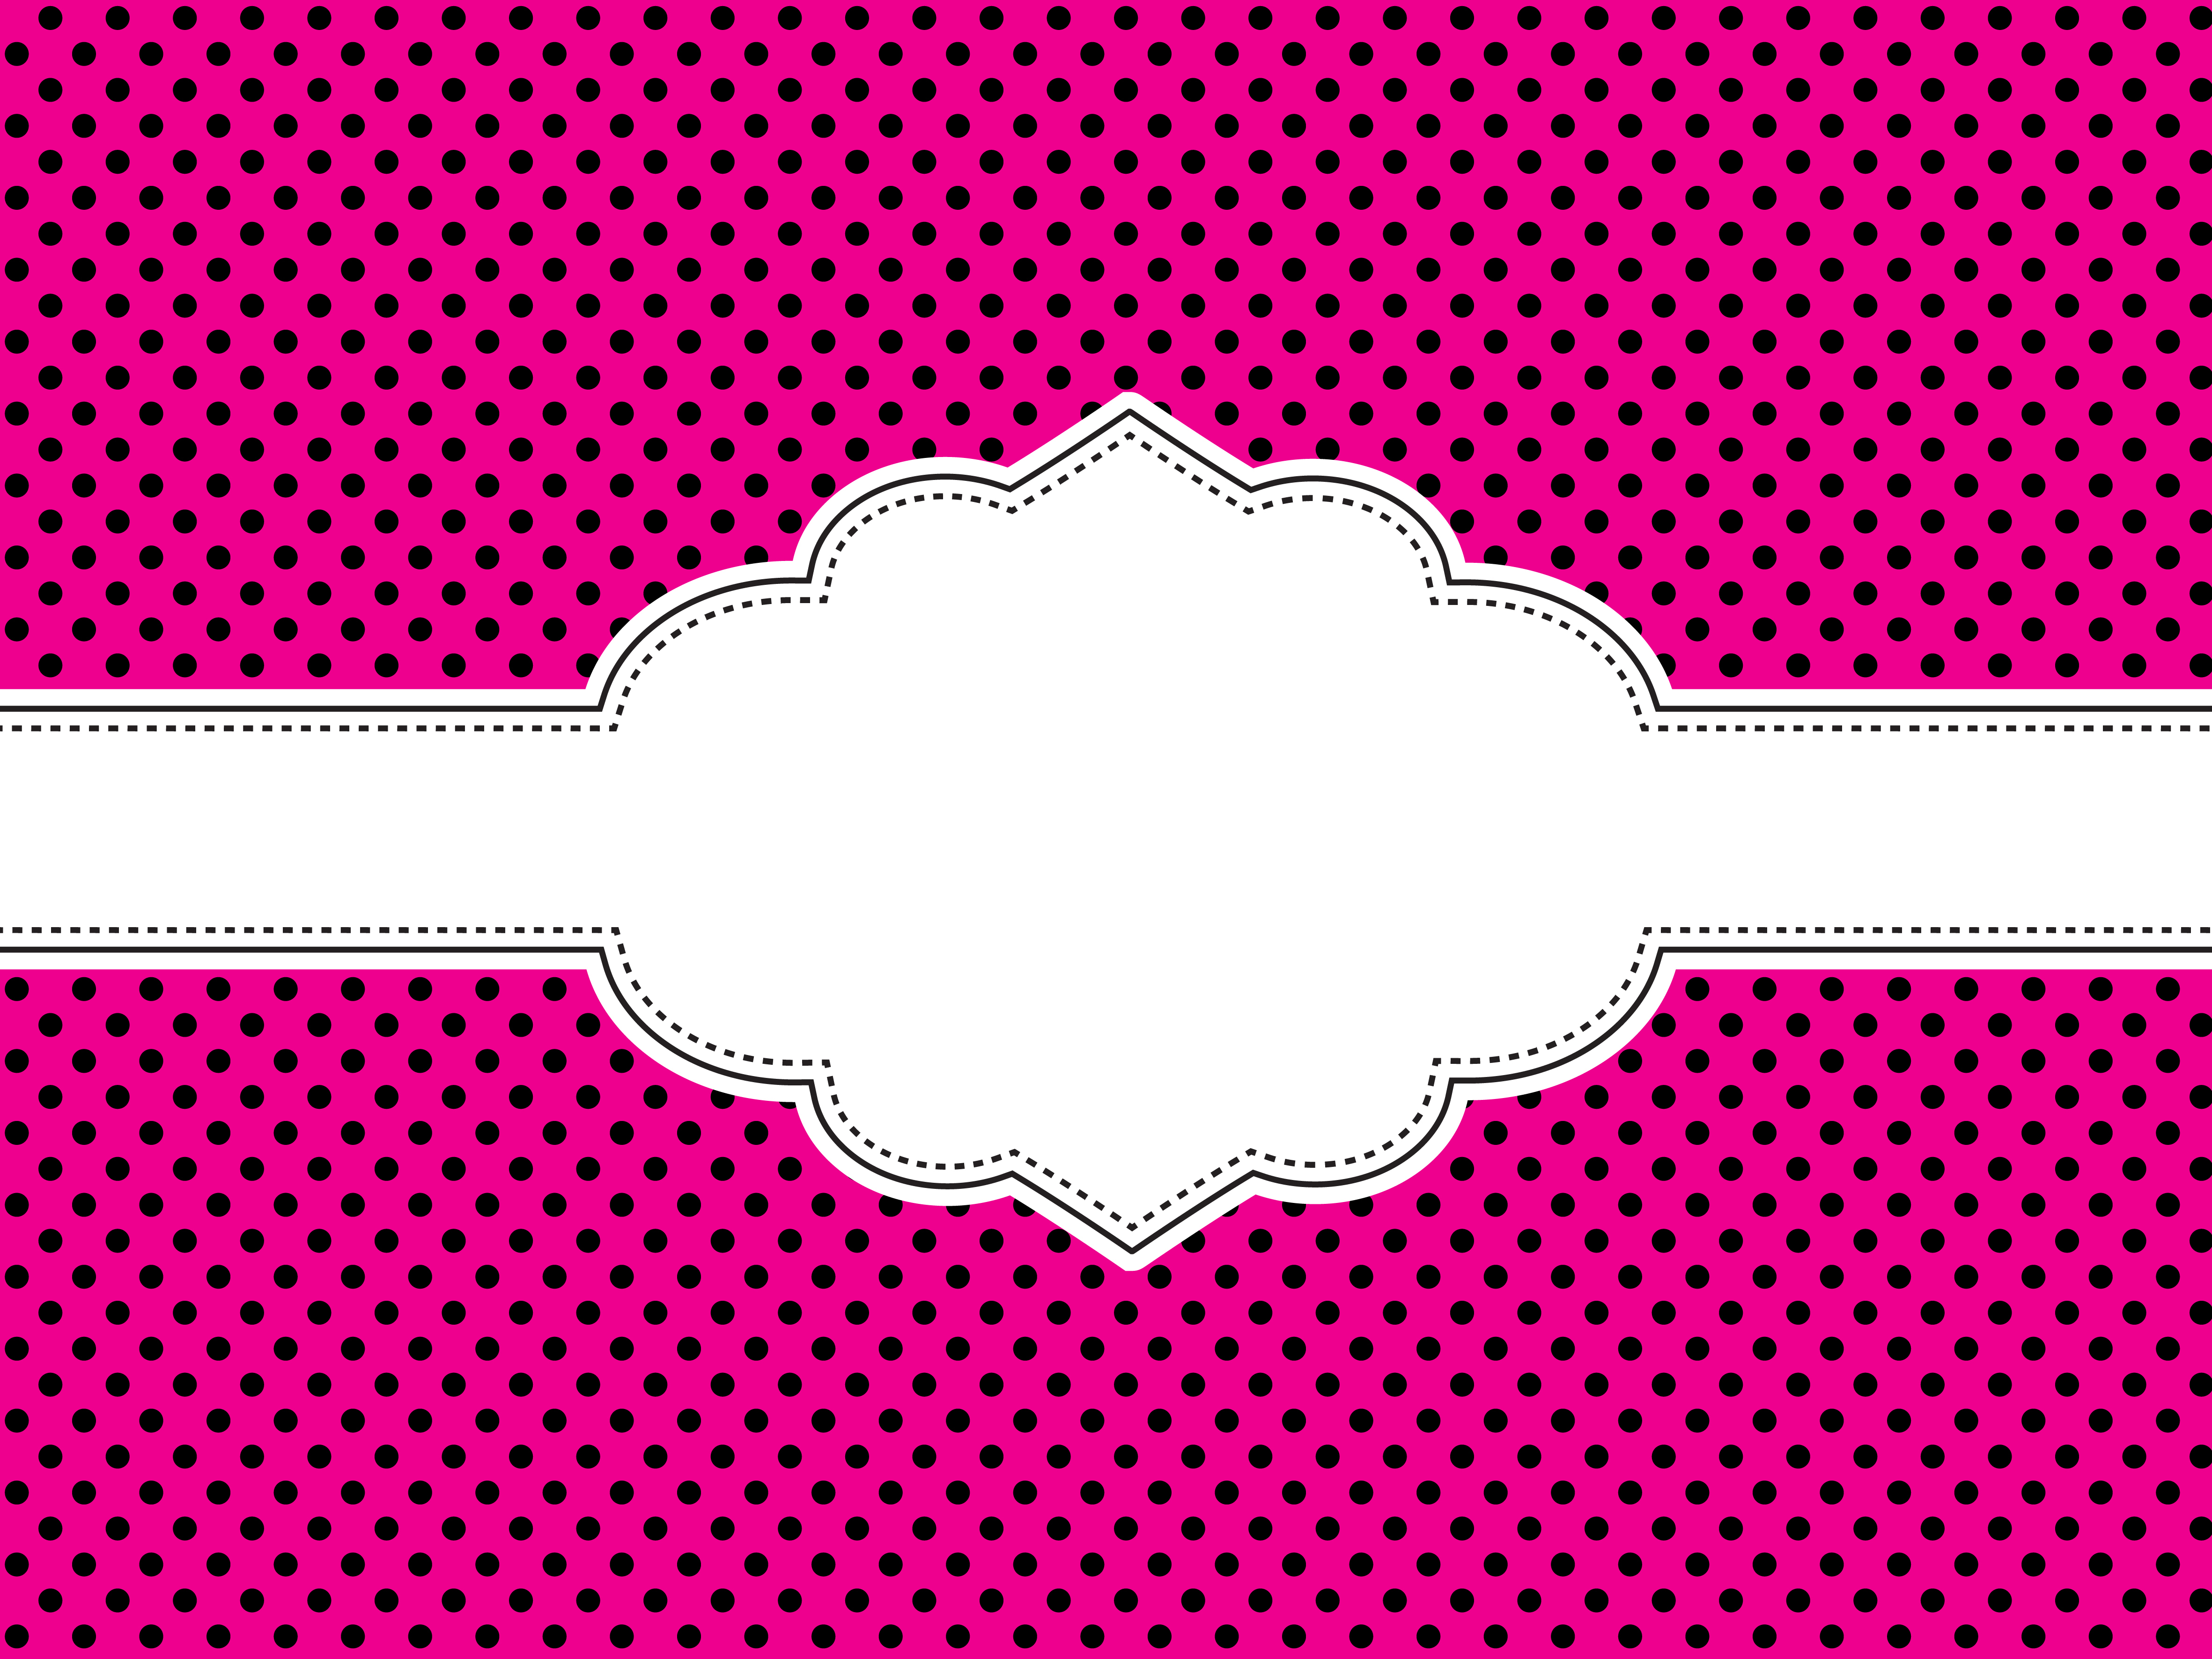 Pink Polka Dot Background Free Vector Art - (236 Free Downloads)